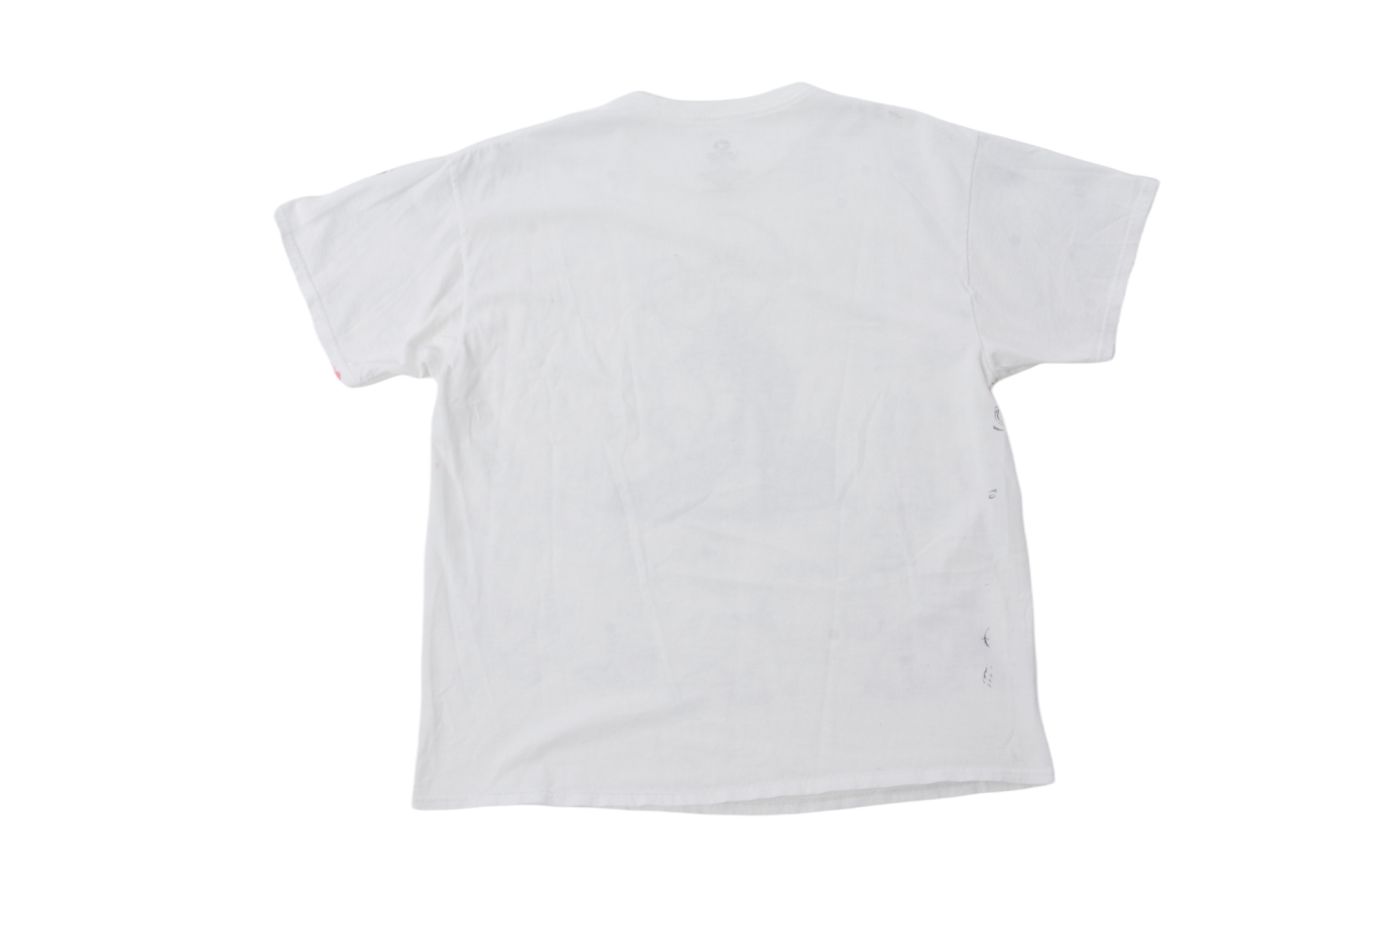 Comme des Garcons Shirt X Kaws Print Tee White M CDG-208698